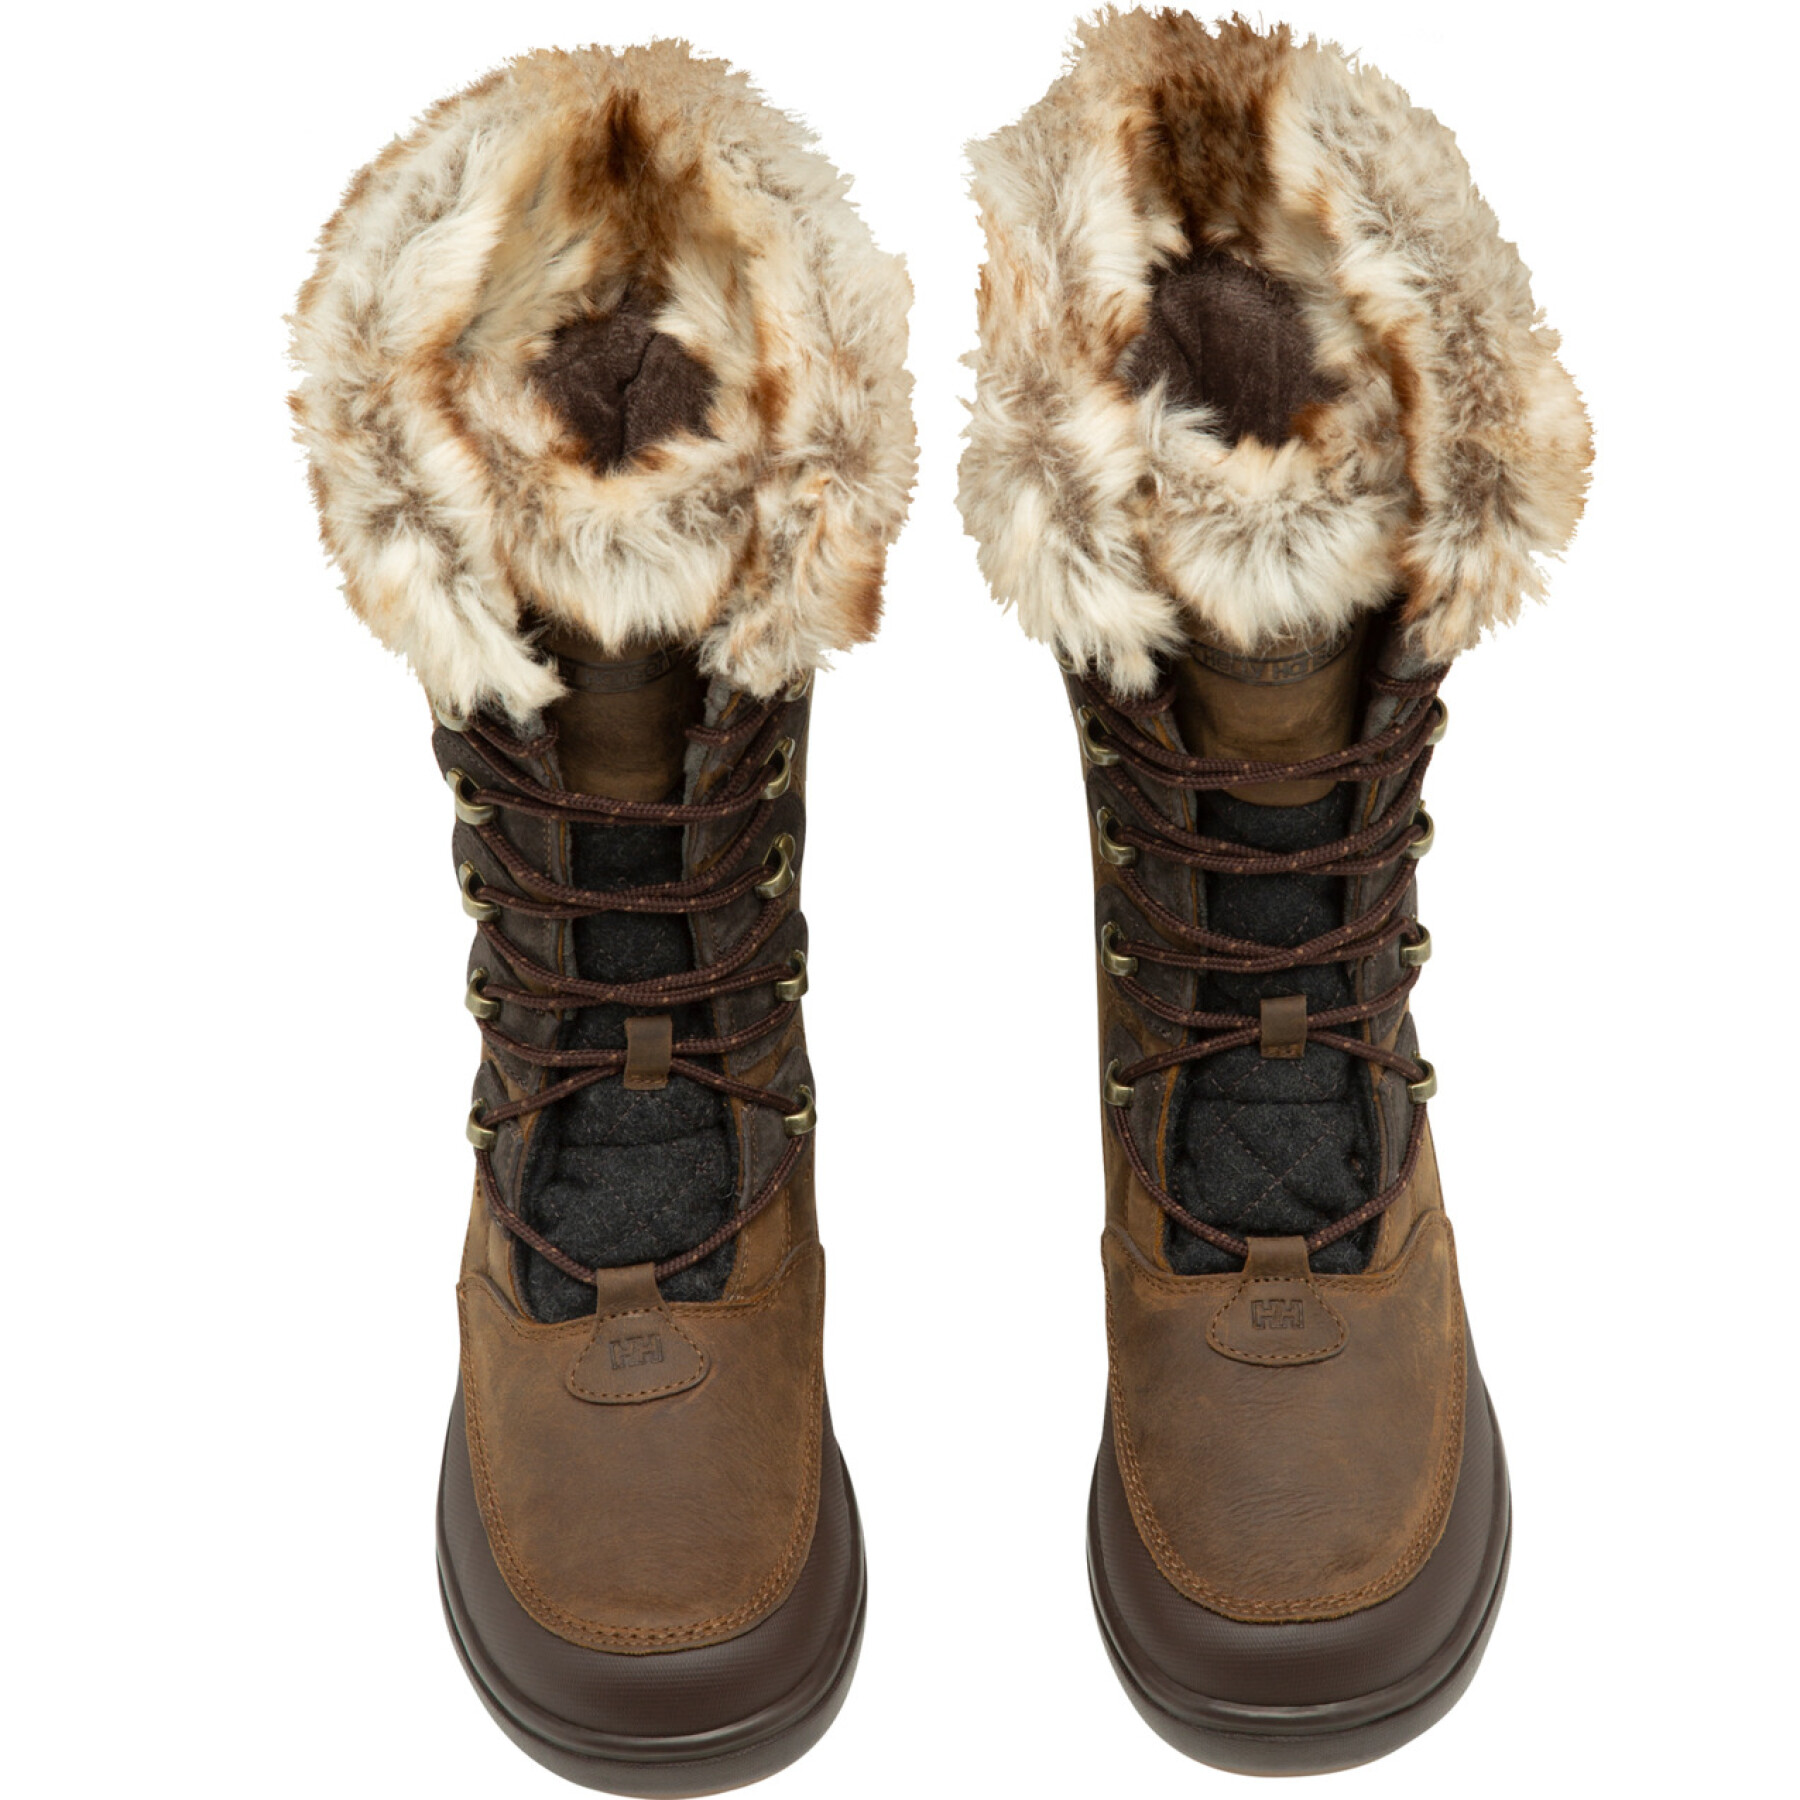 Women's winter boots Helly Hansen garibaldi vl